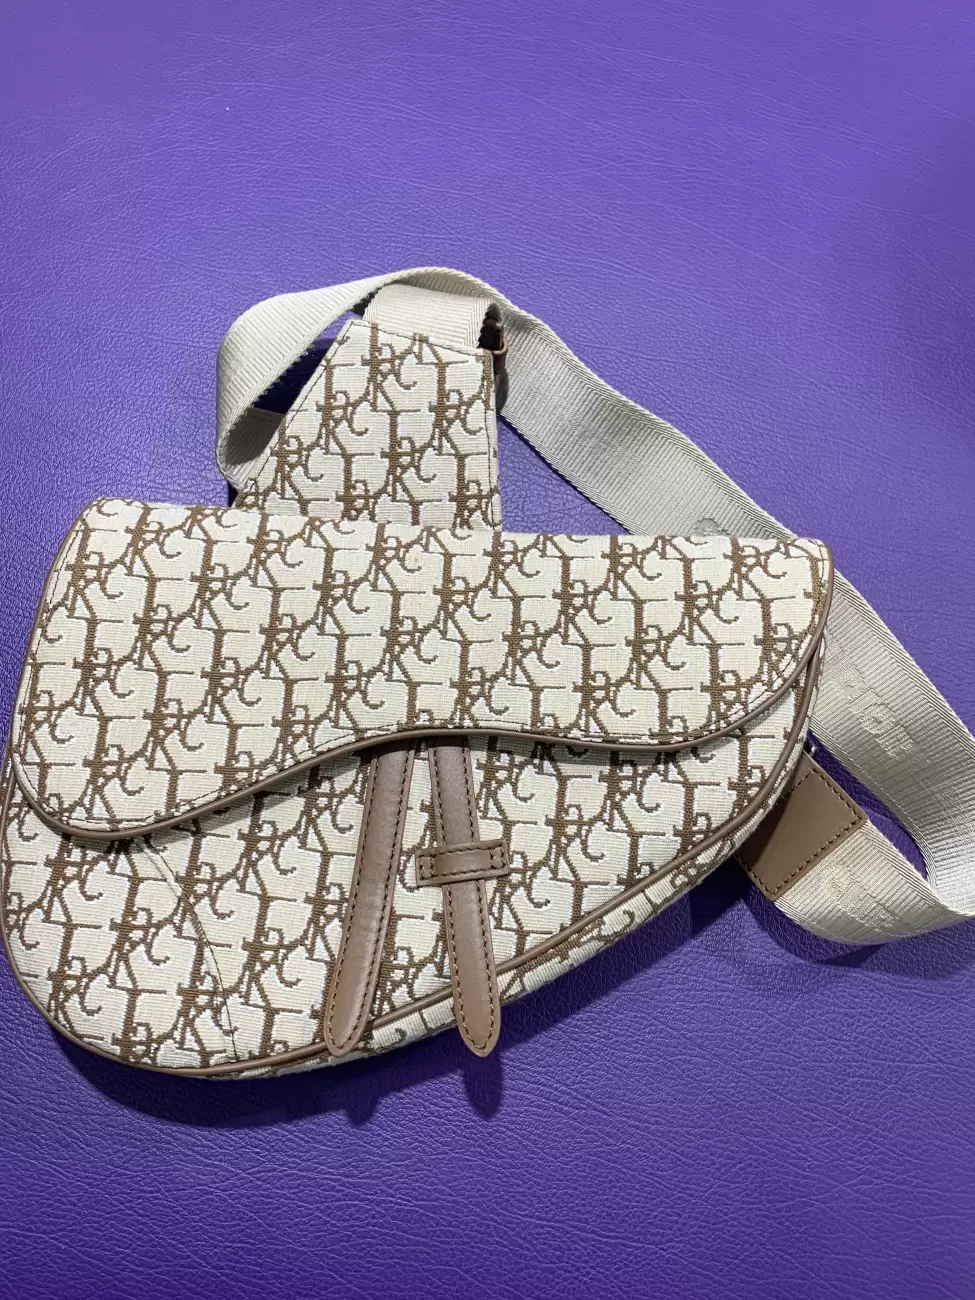 33506 - Dior X CACTUS JACK Mini Saddle Bag | Item Details - AfterMarket